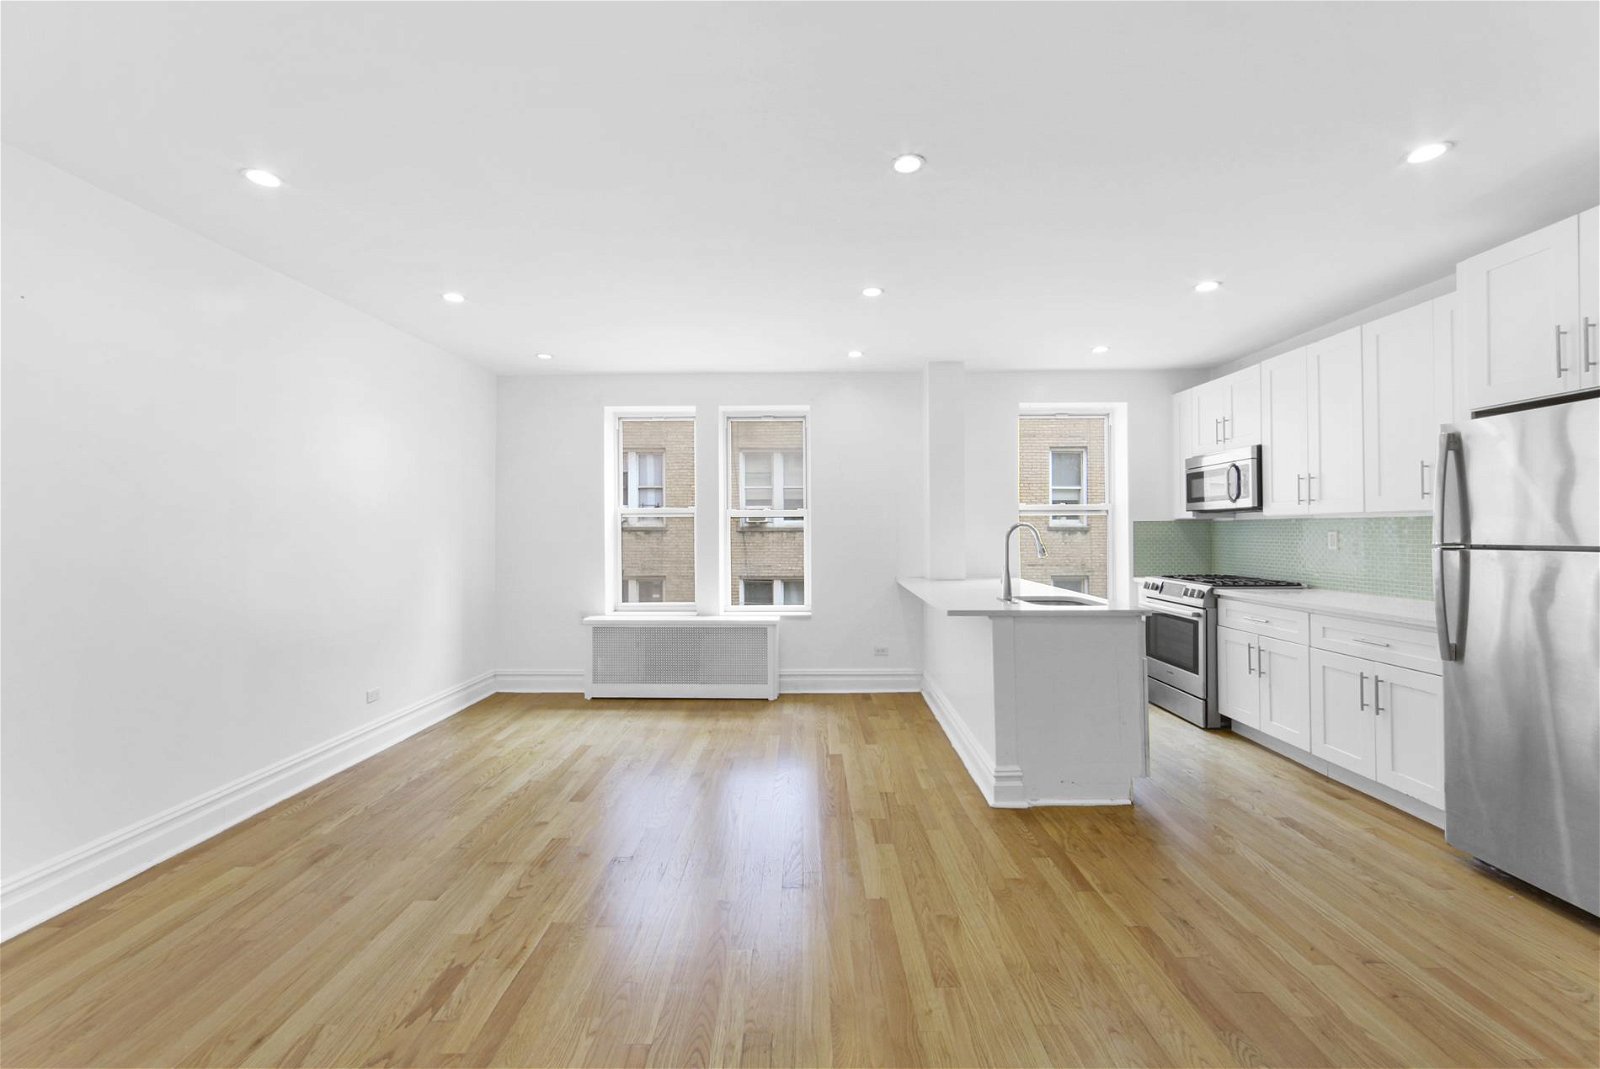 Real estate property located at 156-08 Riverside #4-J, NewYork, Washington Heights, New York City, NY